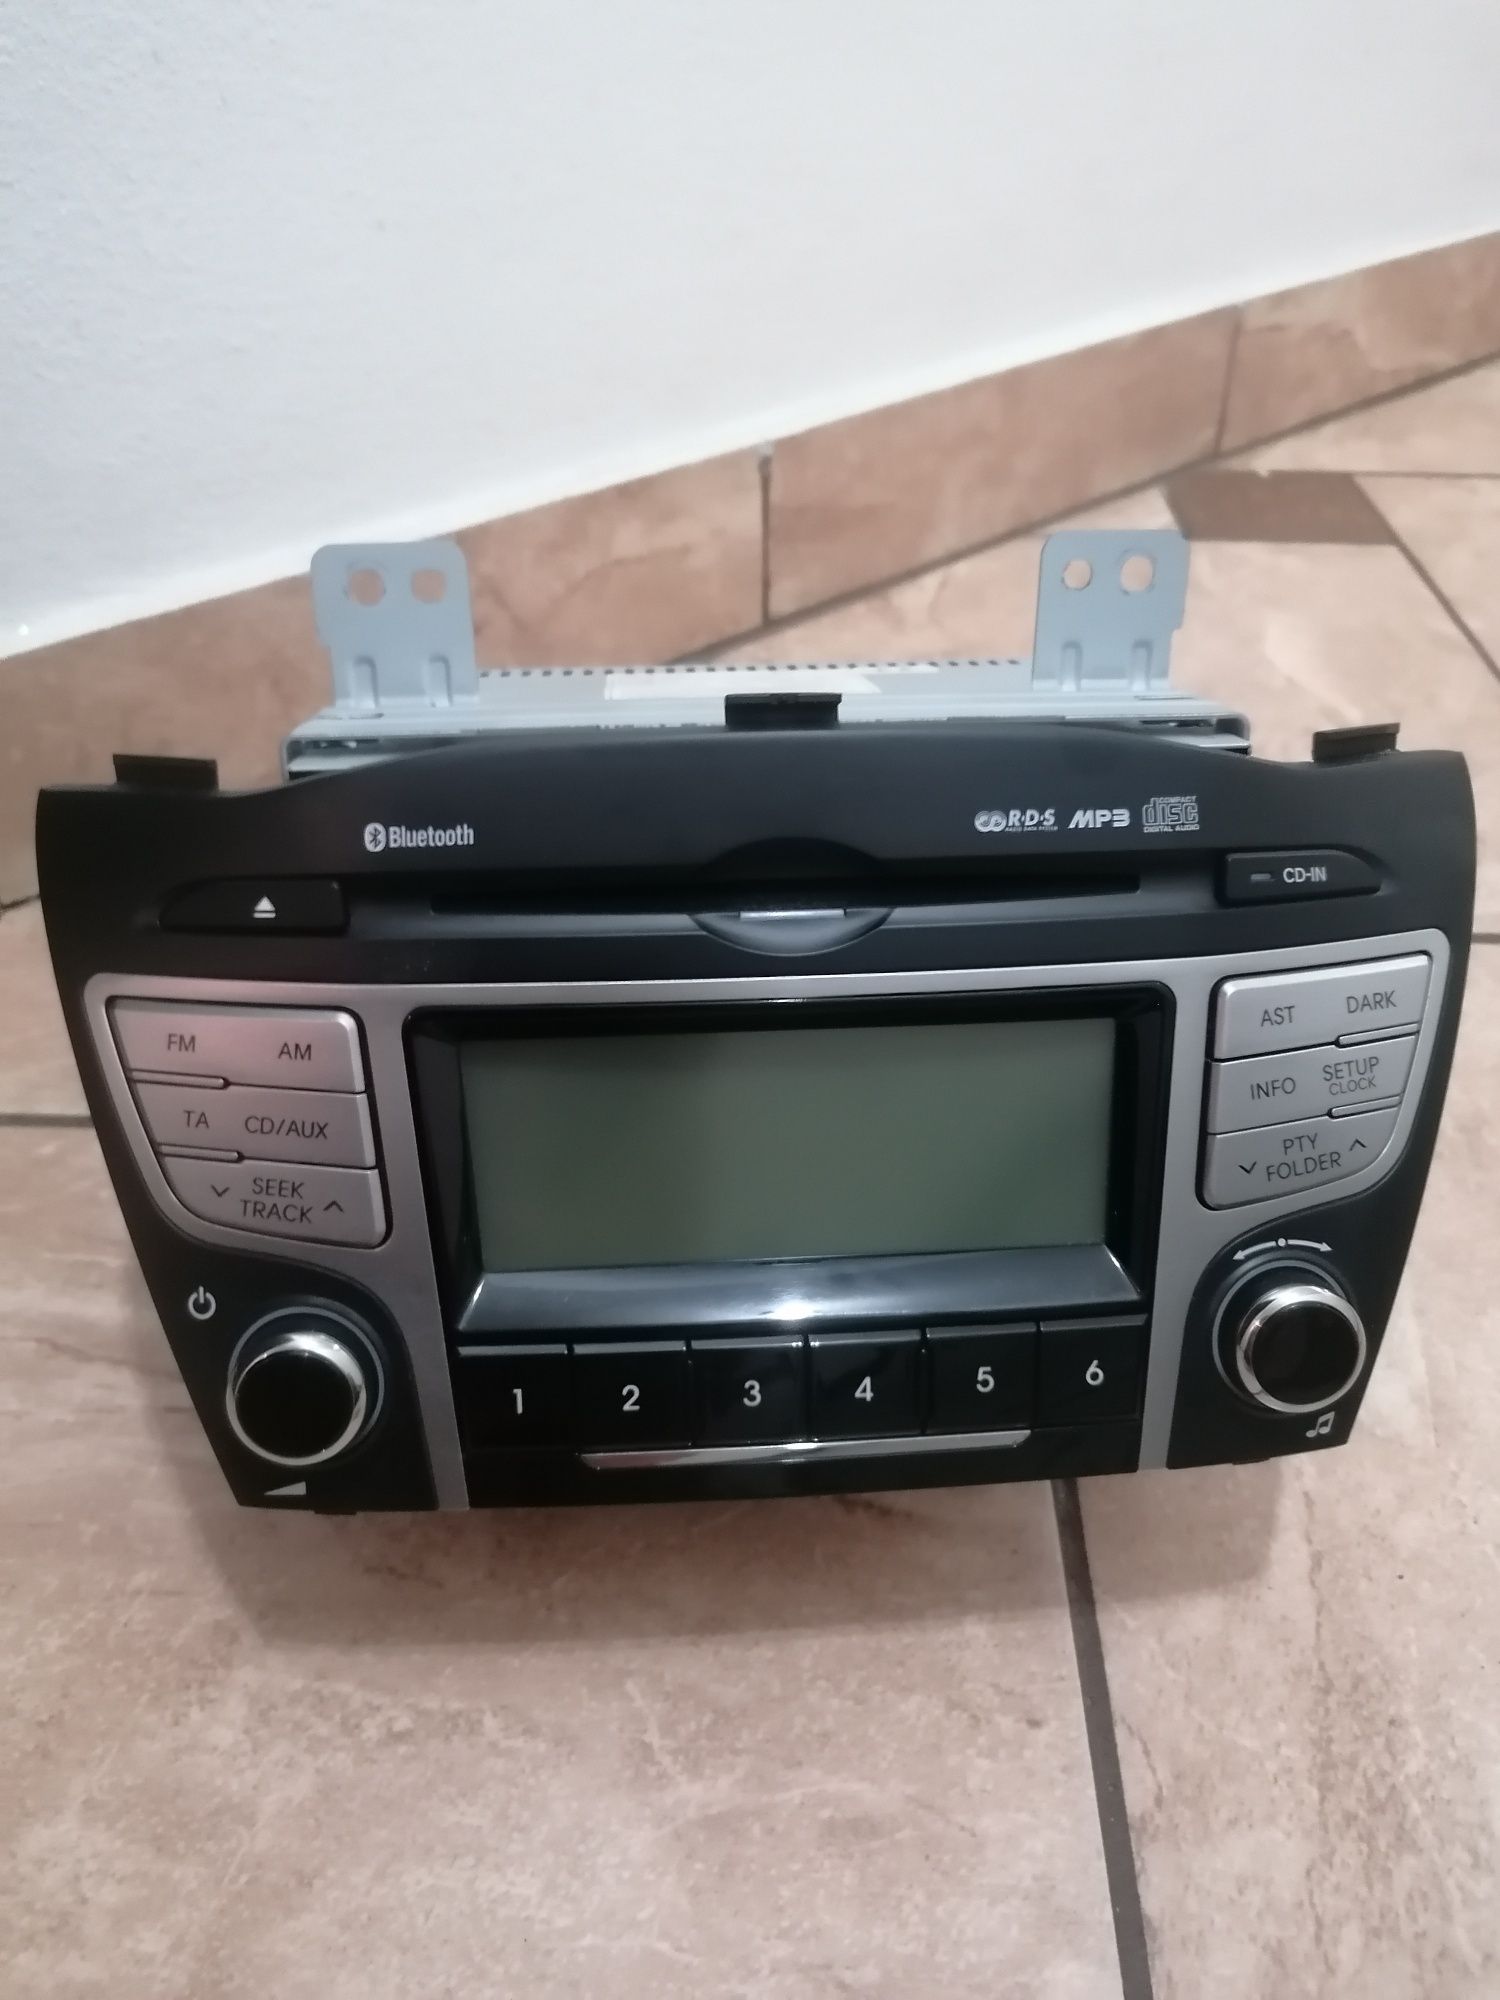 Radio Hyundai ix35 2012rok